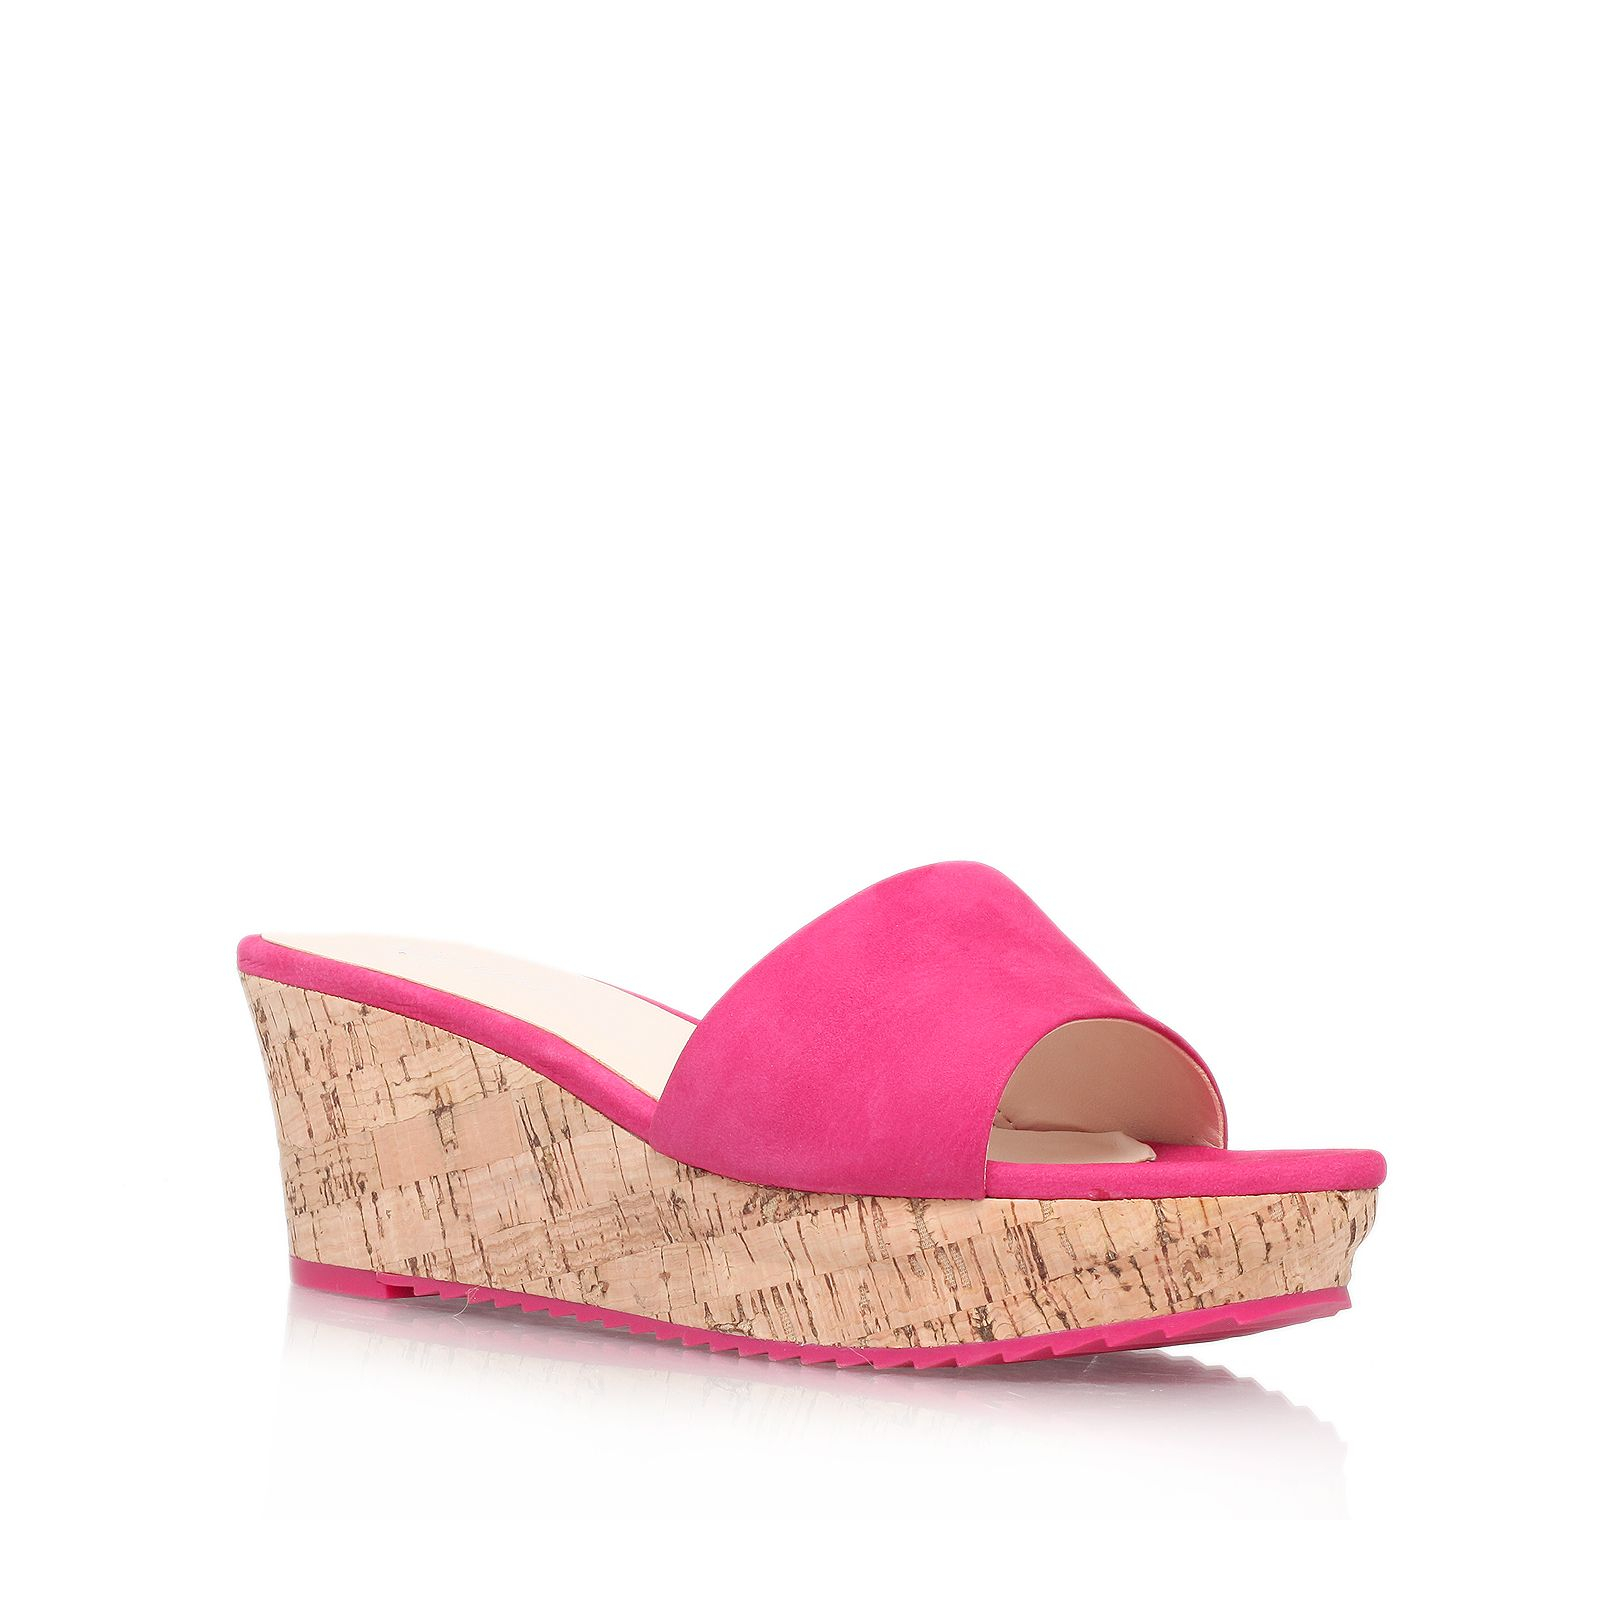 Nine West Confetty Mid Wedge Heel Sandals in Pink | Lyst